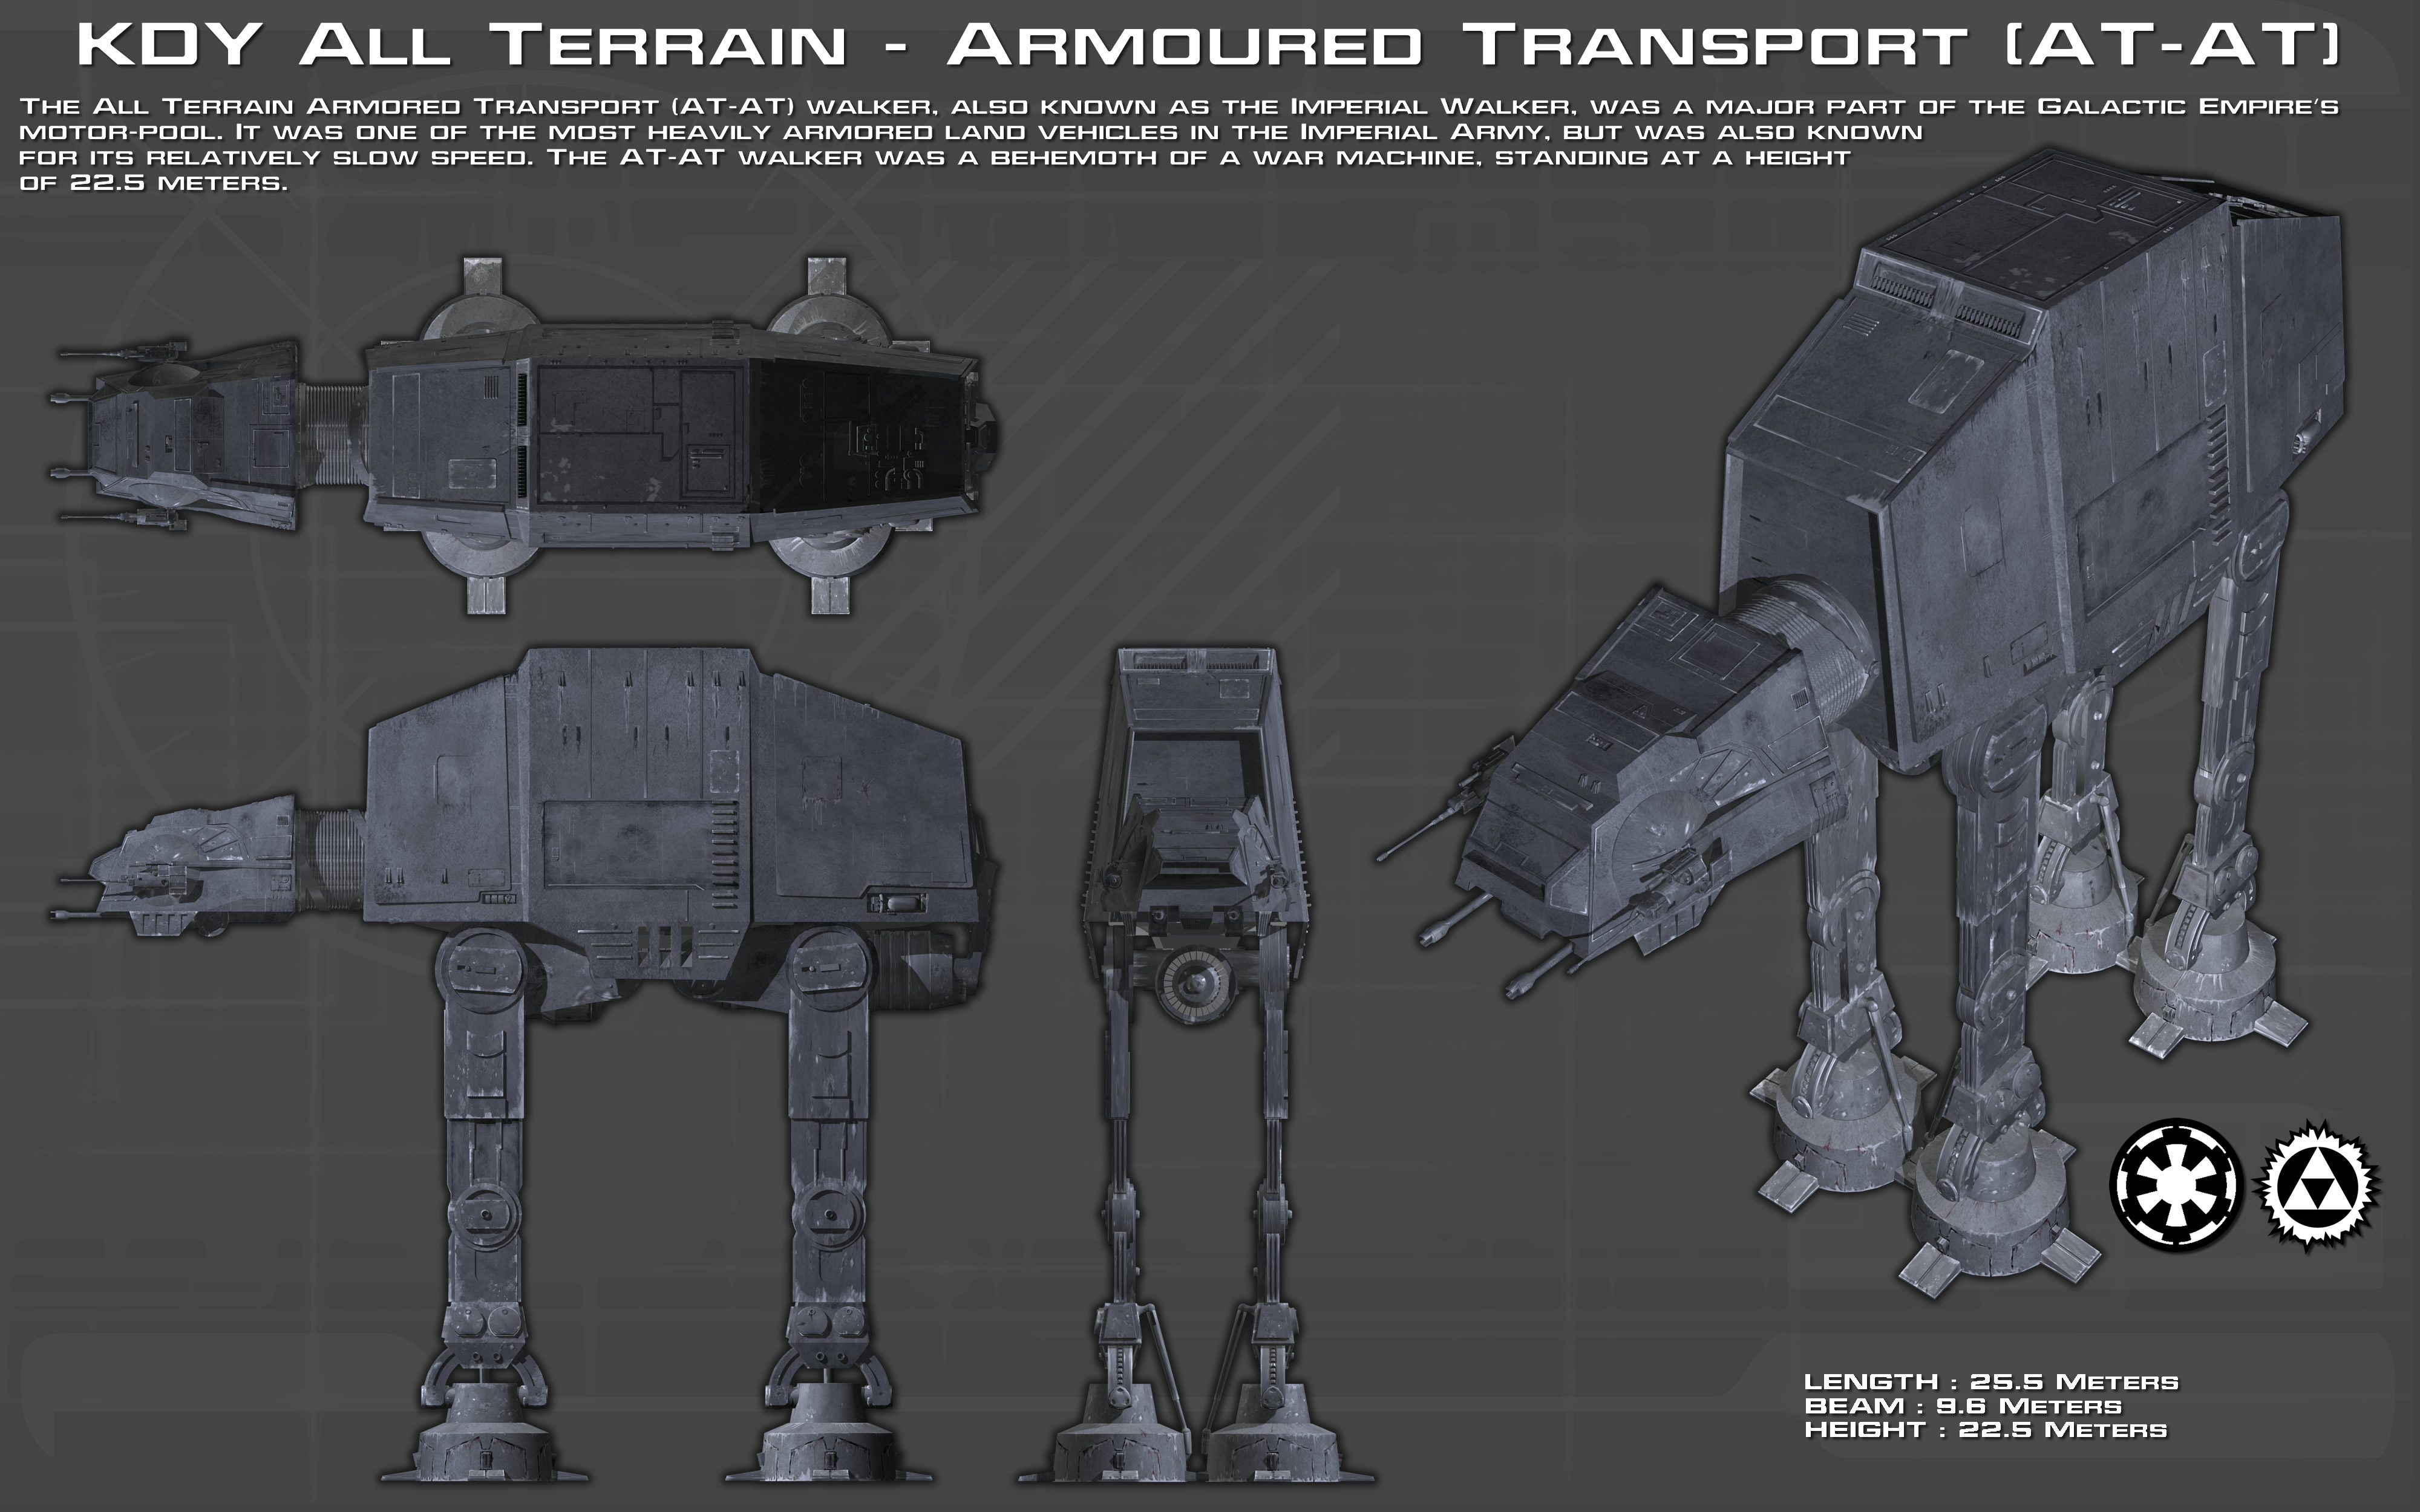 All Terrain Recon Transport, Star Wars Games